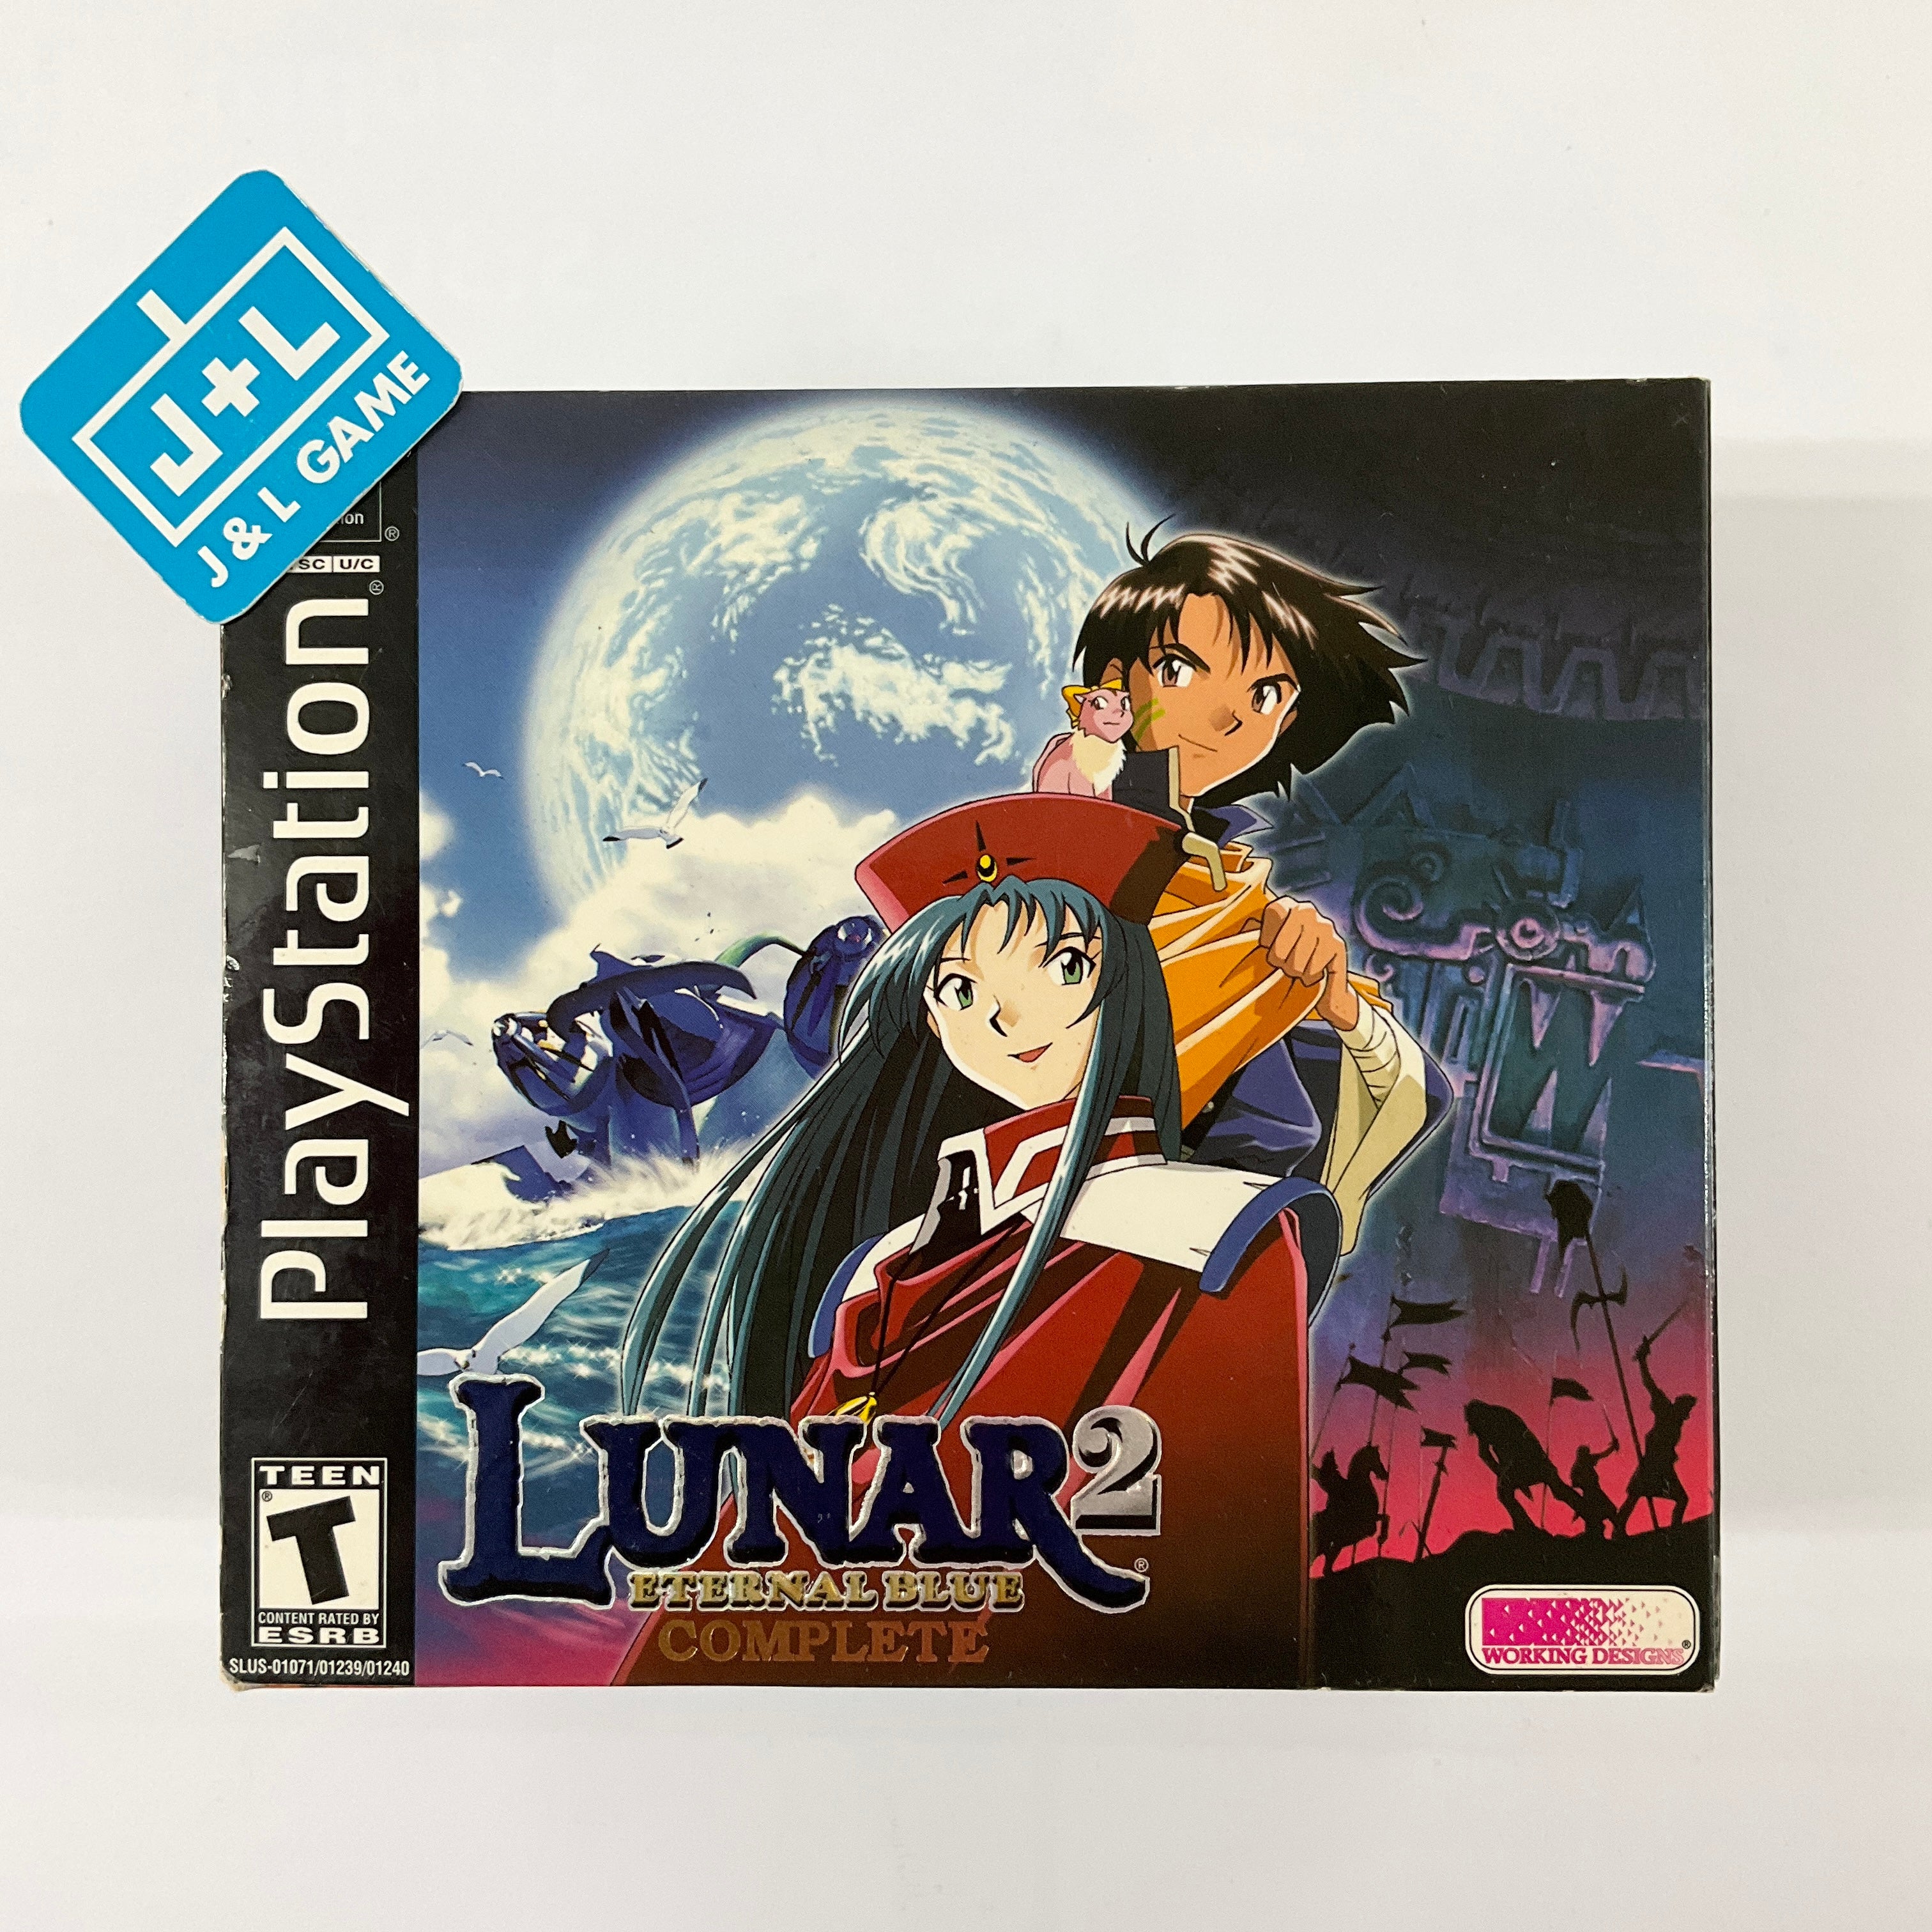 Lunar 2: Eternal Blue Complete - (PS1) PlayStation 1 [Pre-Owned]